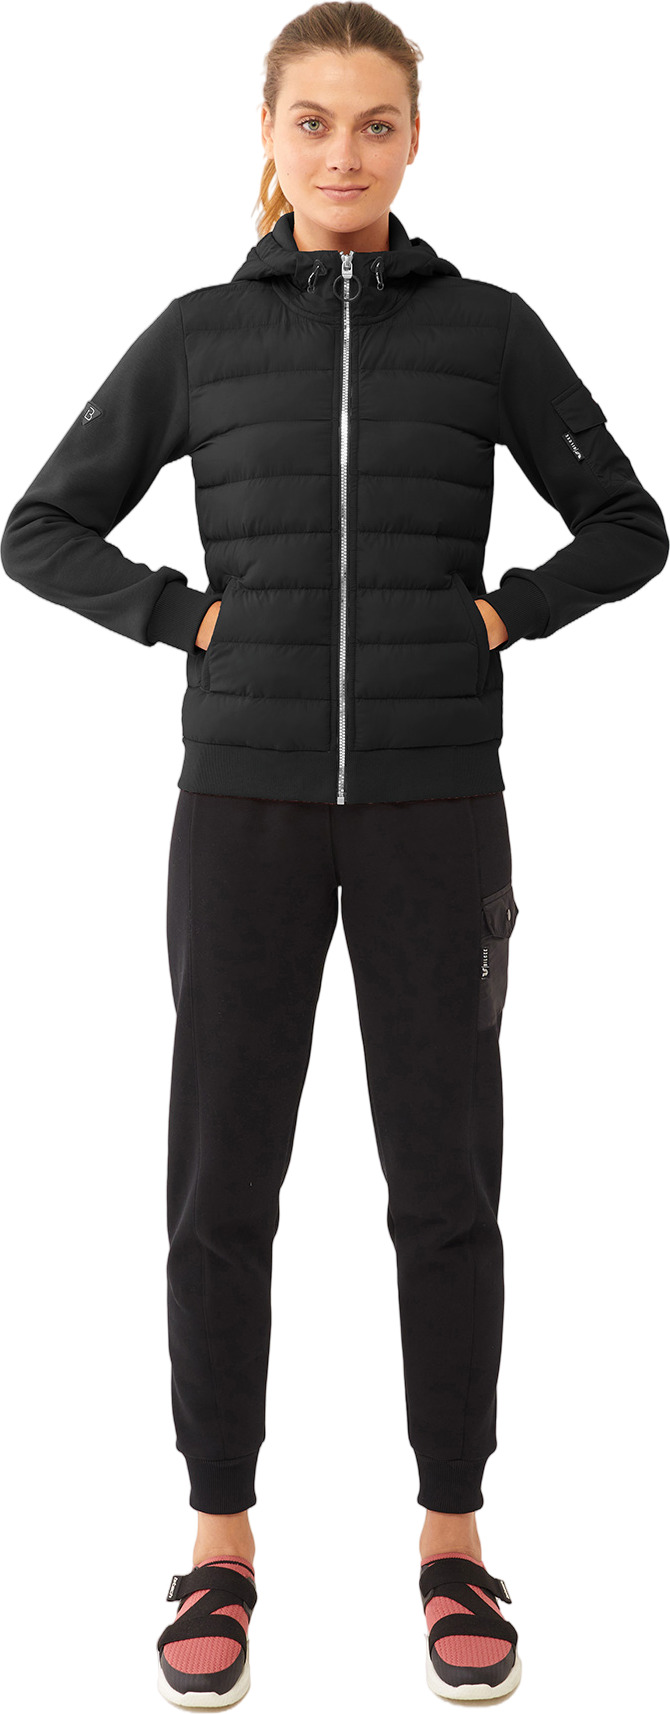 Костюм женский Bilcee Insulated sports suit черный M